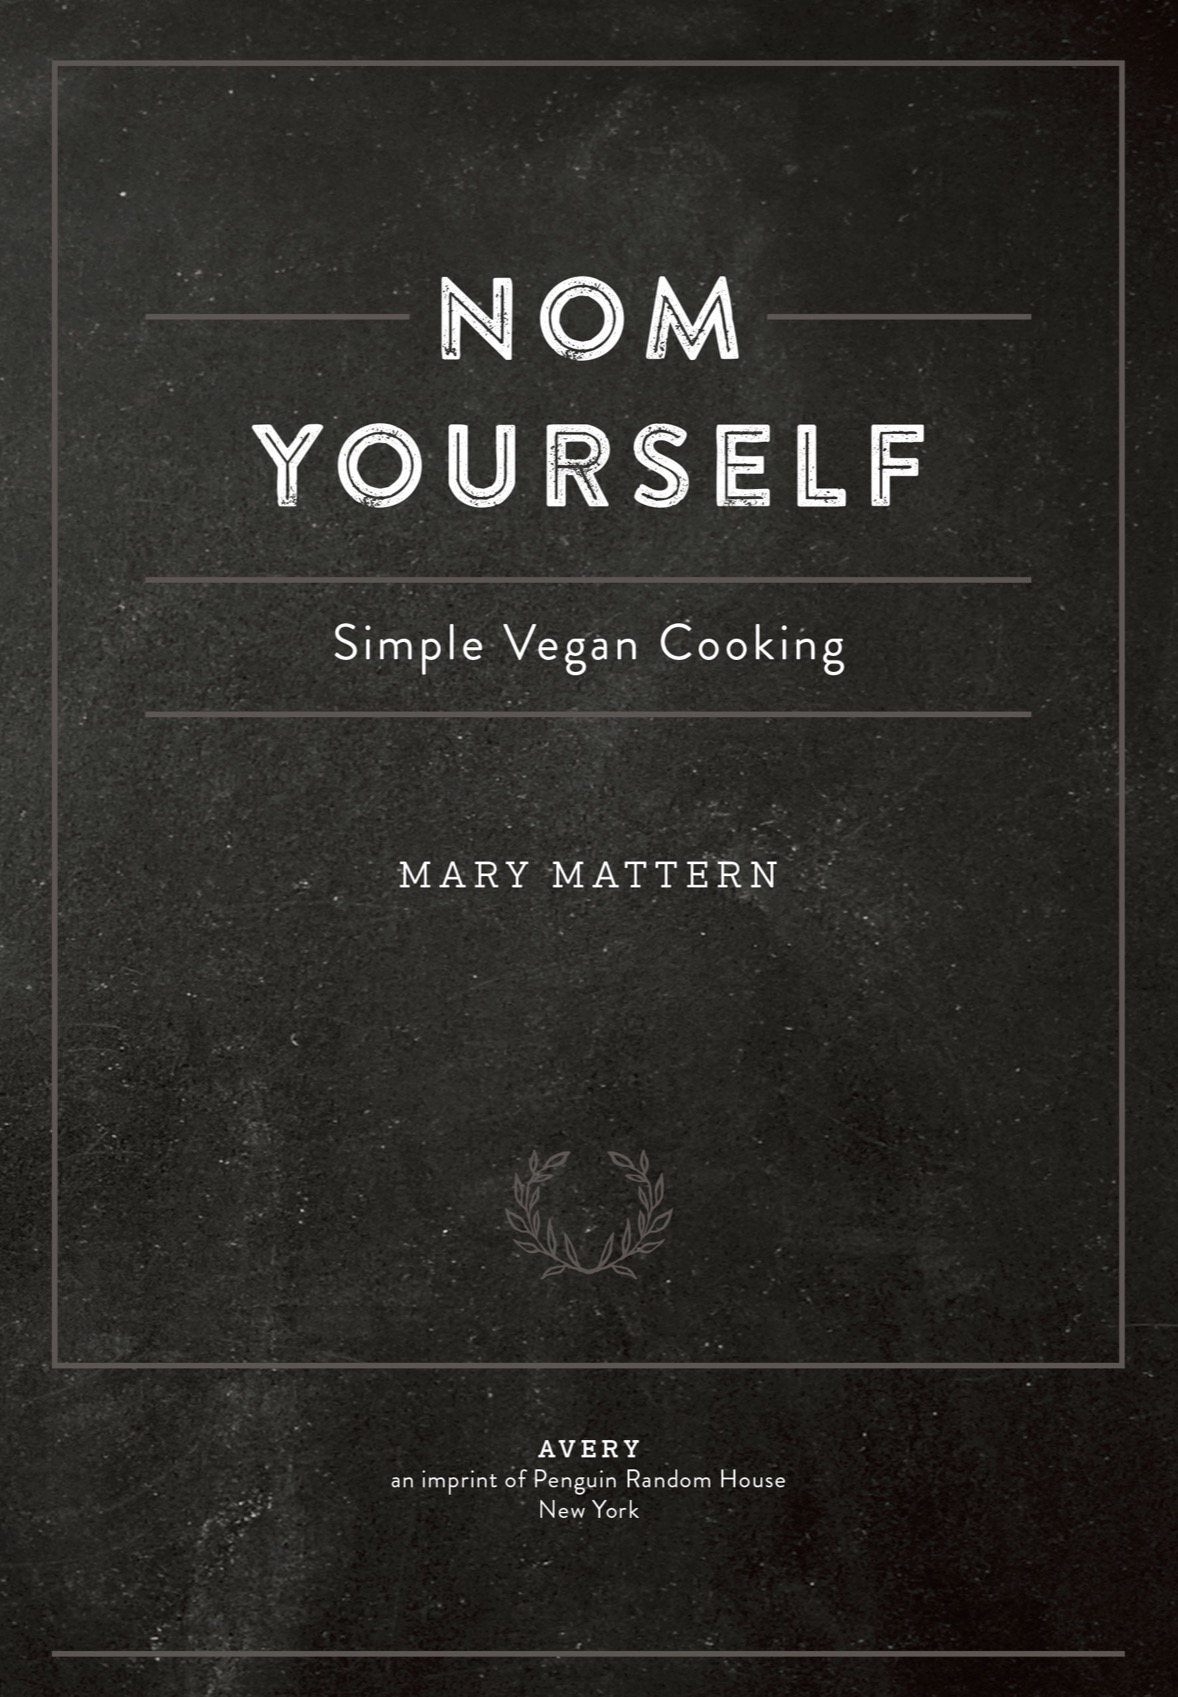 Nom yourself simple vegan cooking - image 4